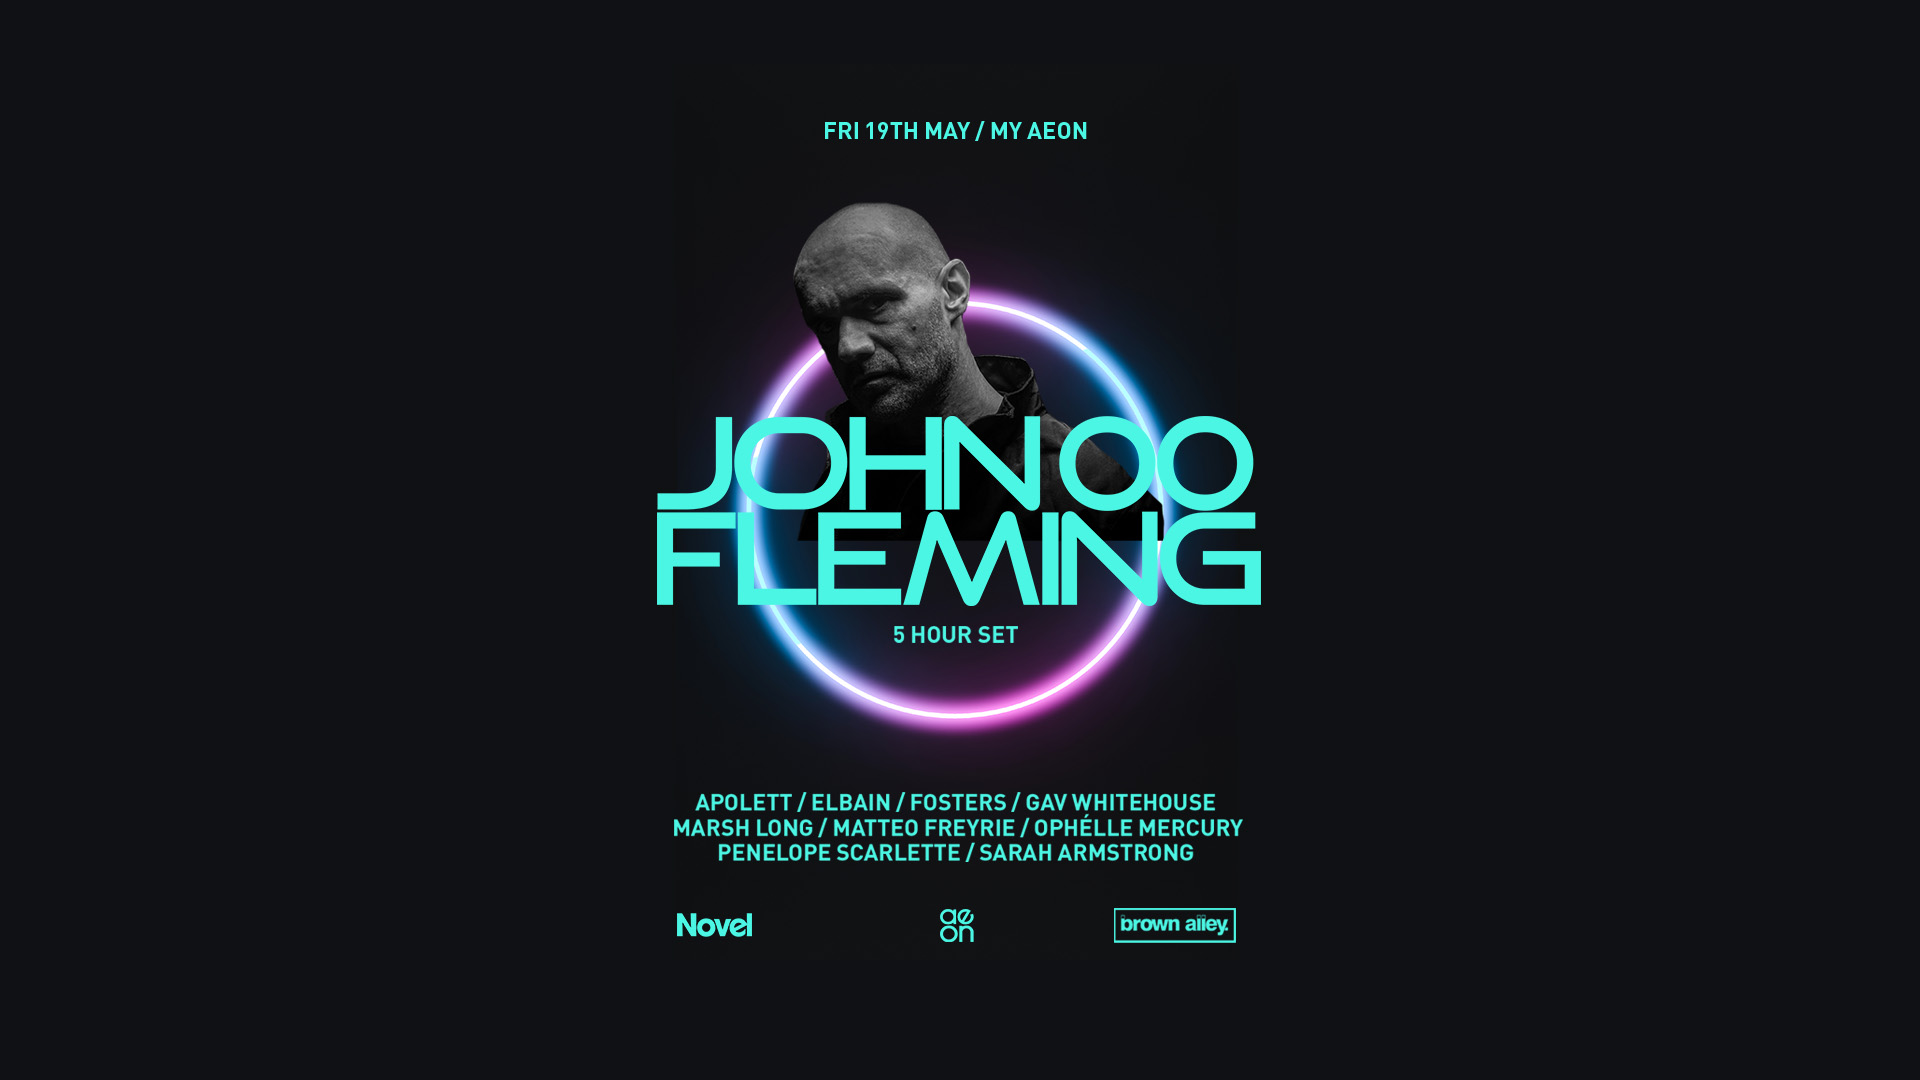 John 00 Fleming (5 hours) - My Aeon